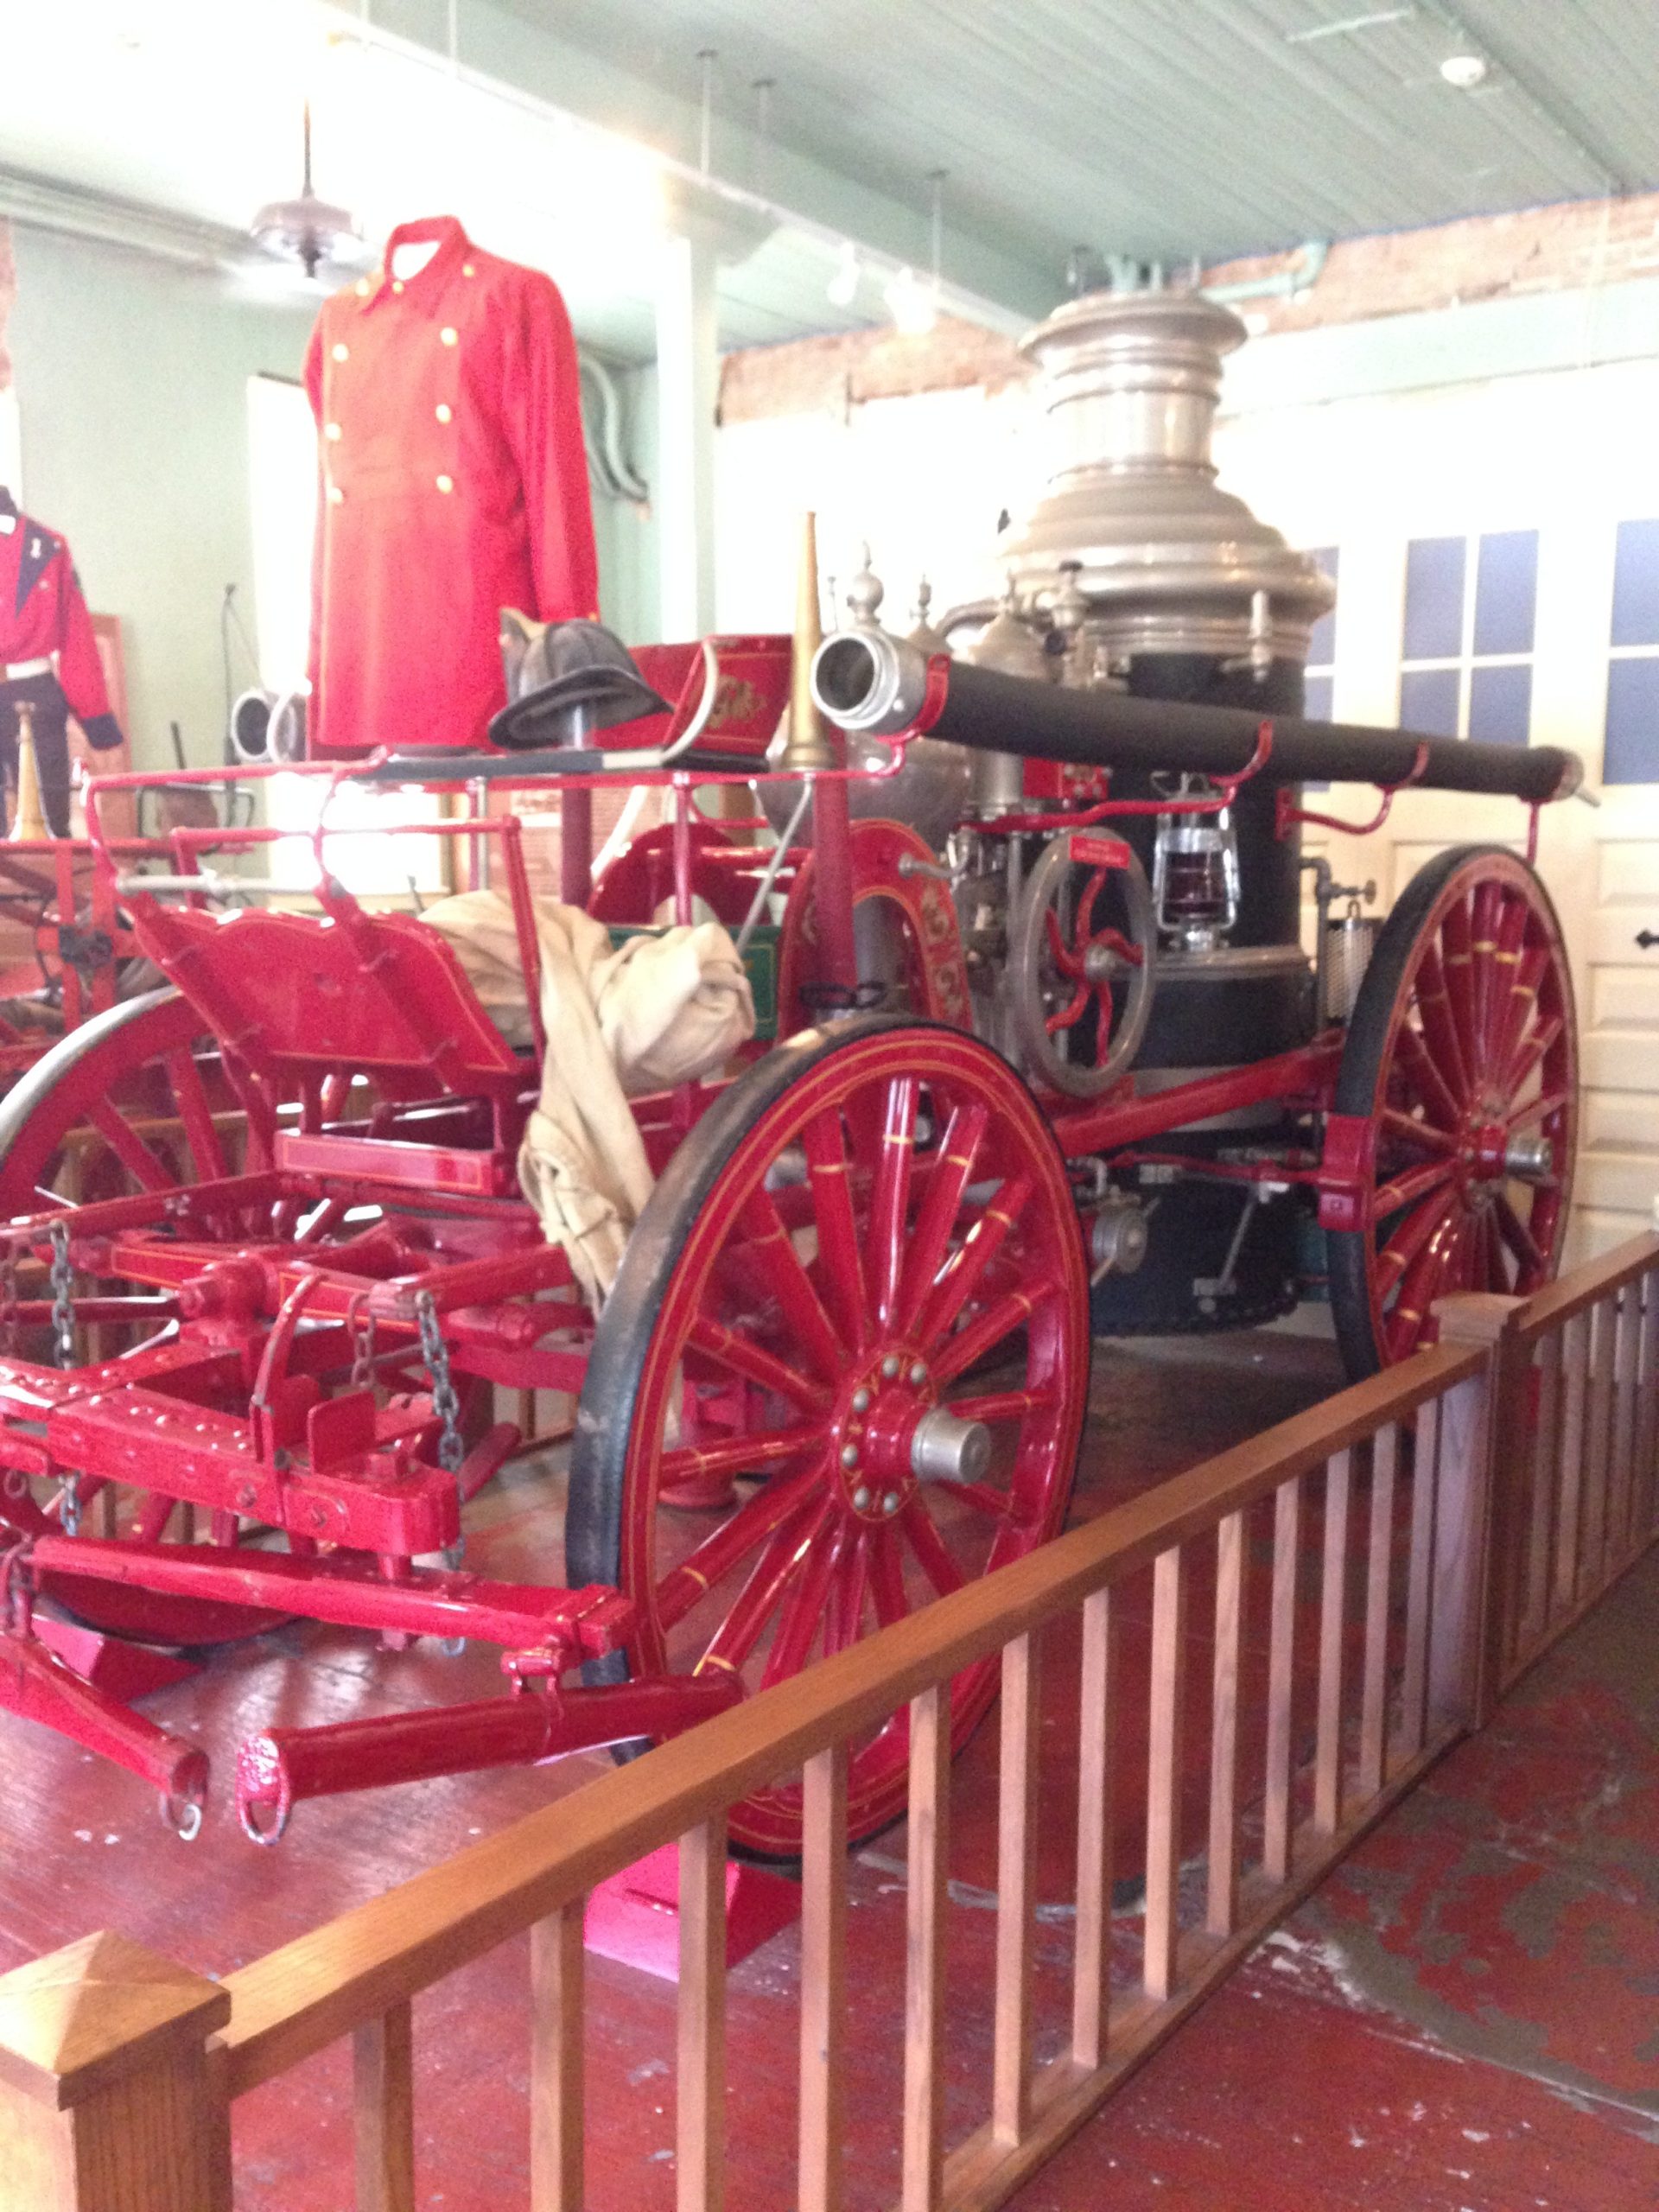 Five museums for five bucks in Houston, Part III: Houston Fire Museum